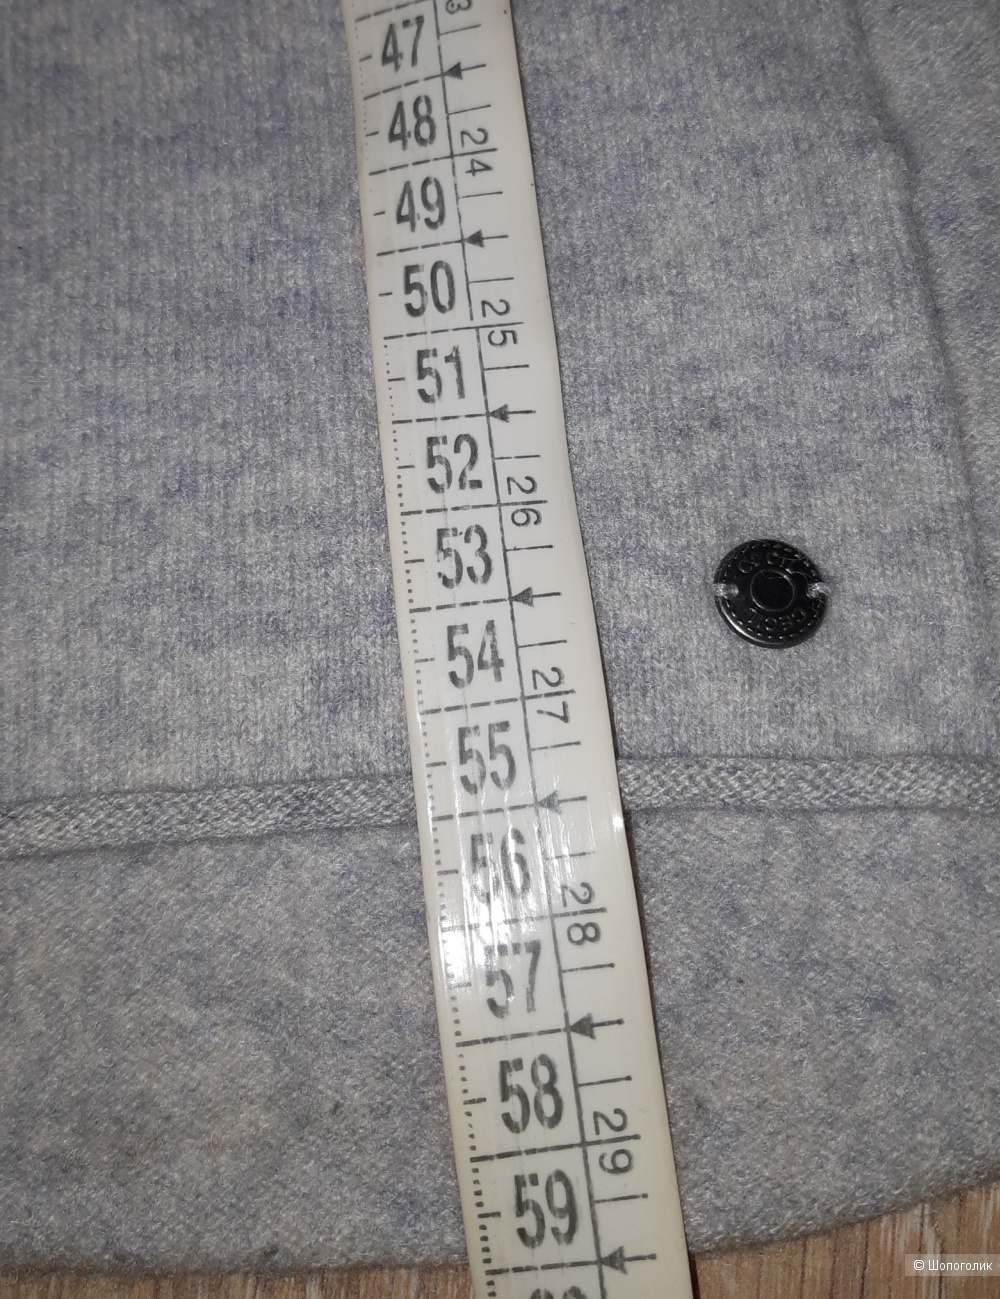 Кашемировый пуловер cecil, размер s